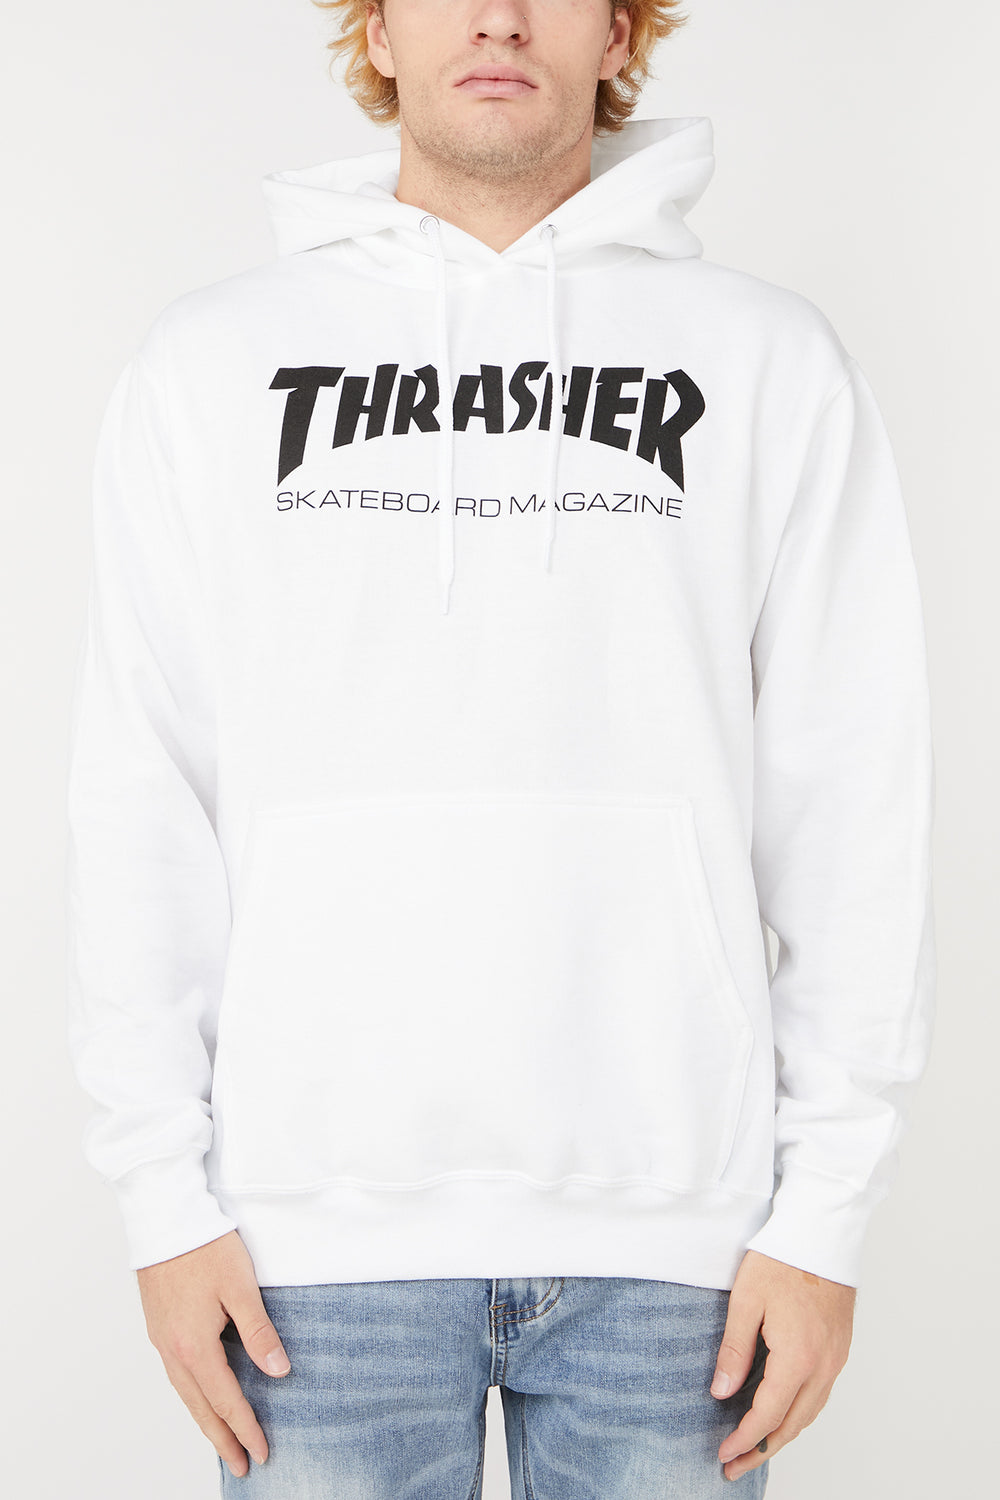 Thrasher Skateboard Magazine White Hoodie White